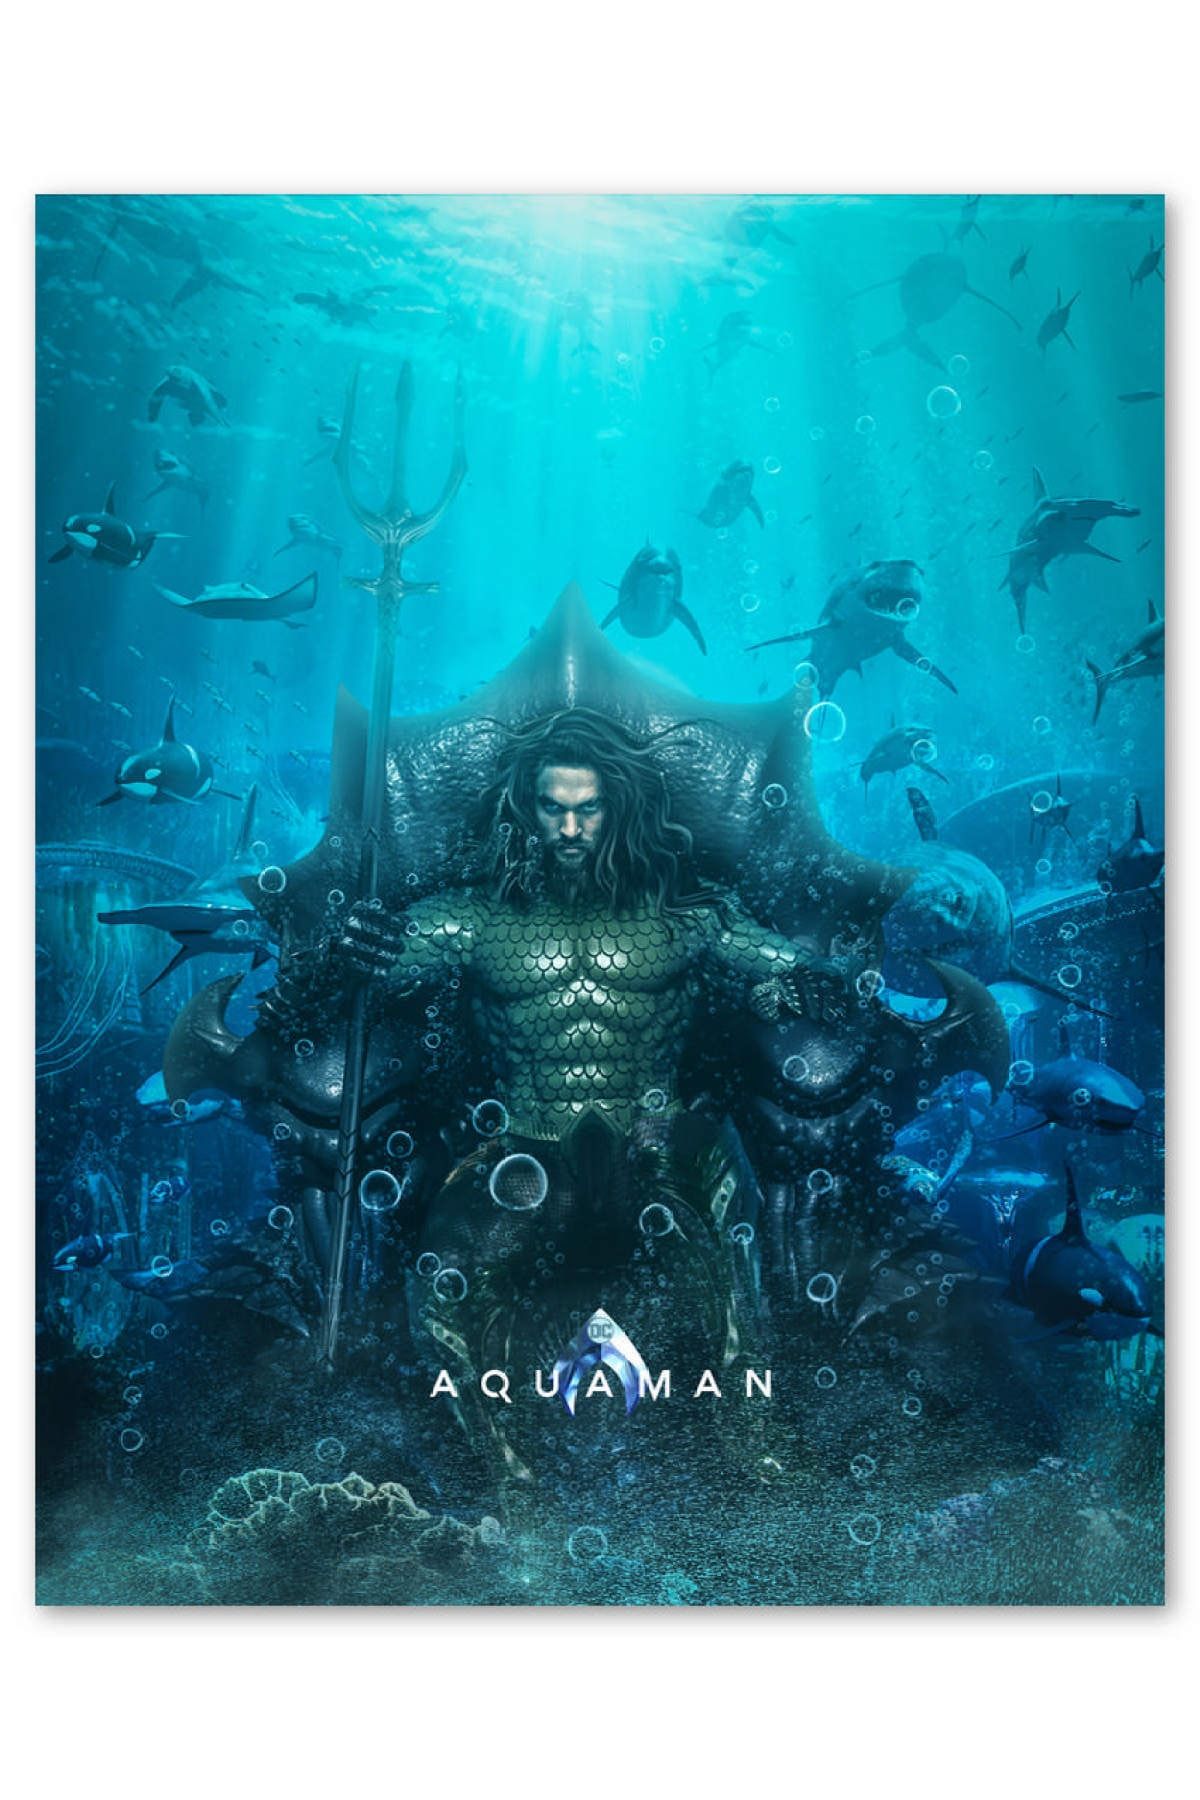 Cakatablo Ahşap Tablo Aquaman Afiş Görseli (25x35 Cm Boyut)